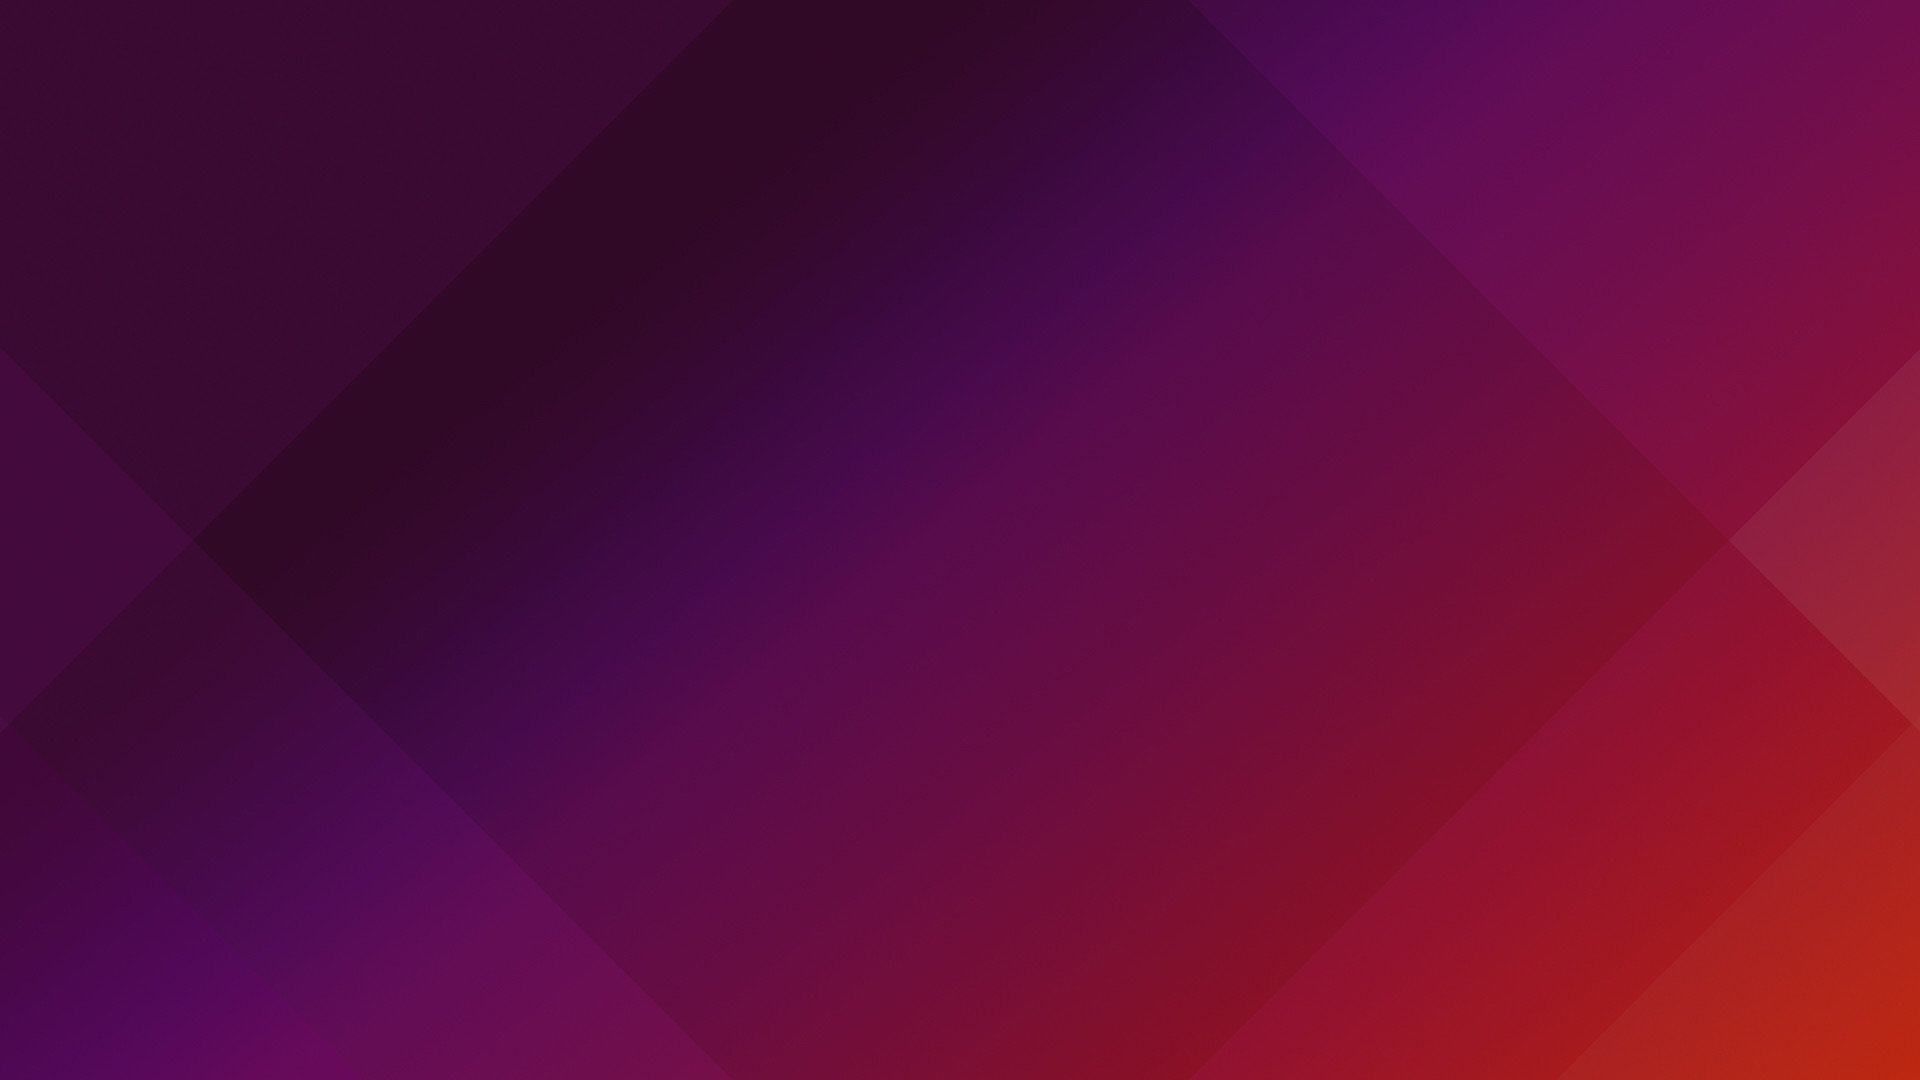 Ubuntu wallpaper HD  Linux ubuntu logo